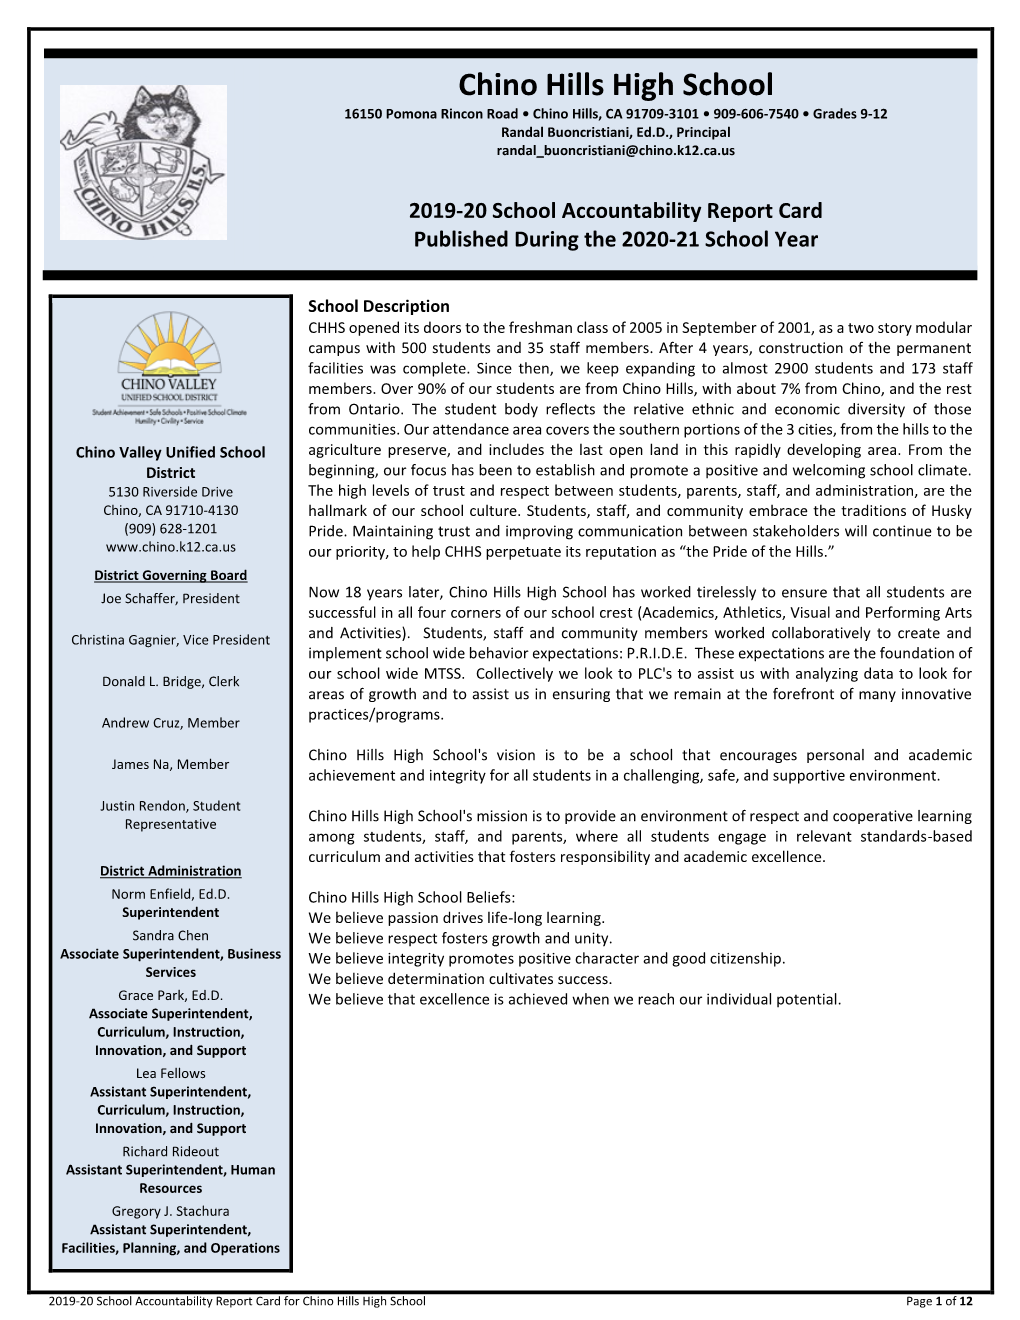 2019 School Accountability Report Card